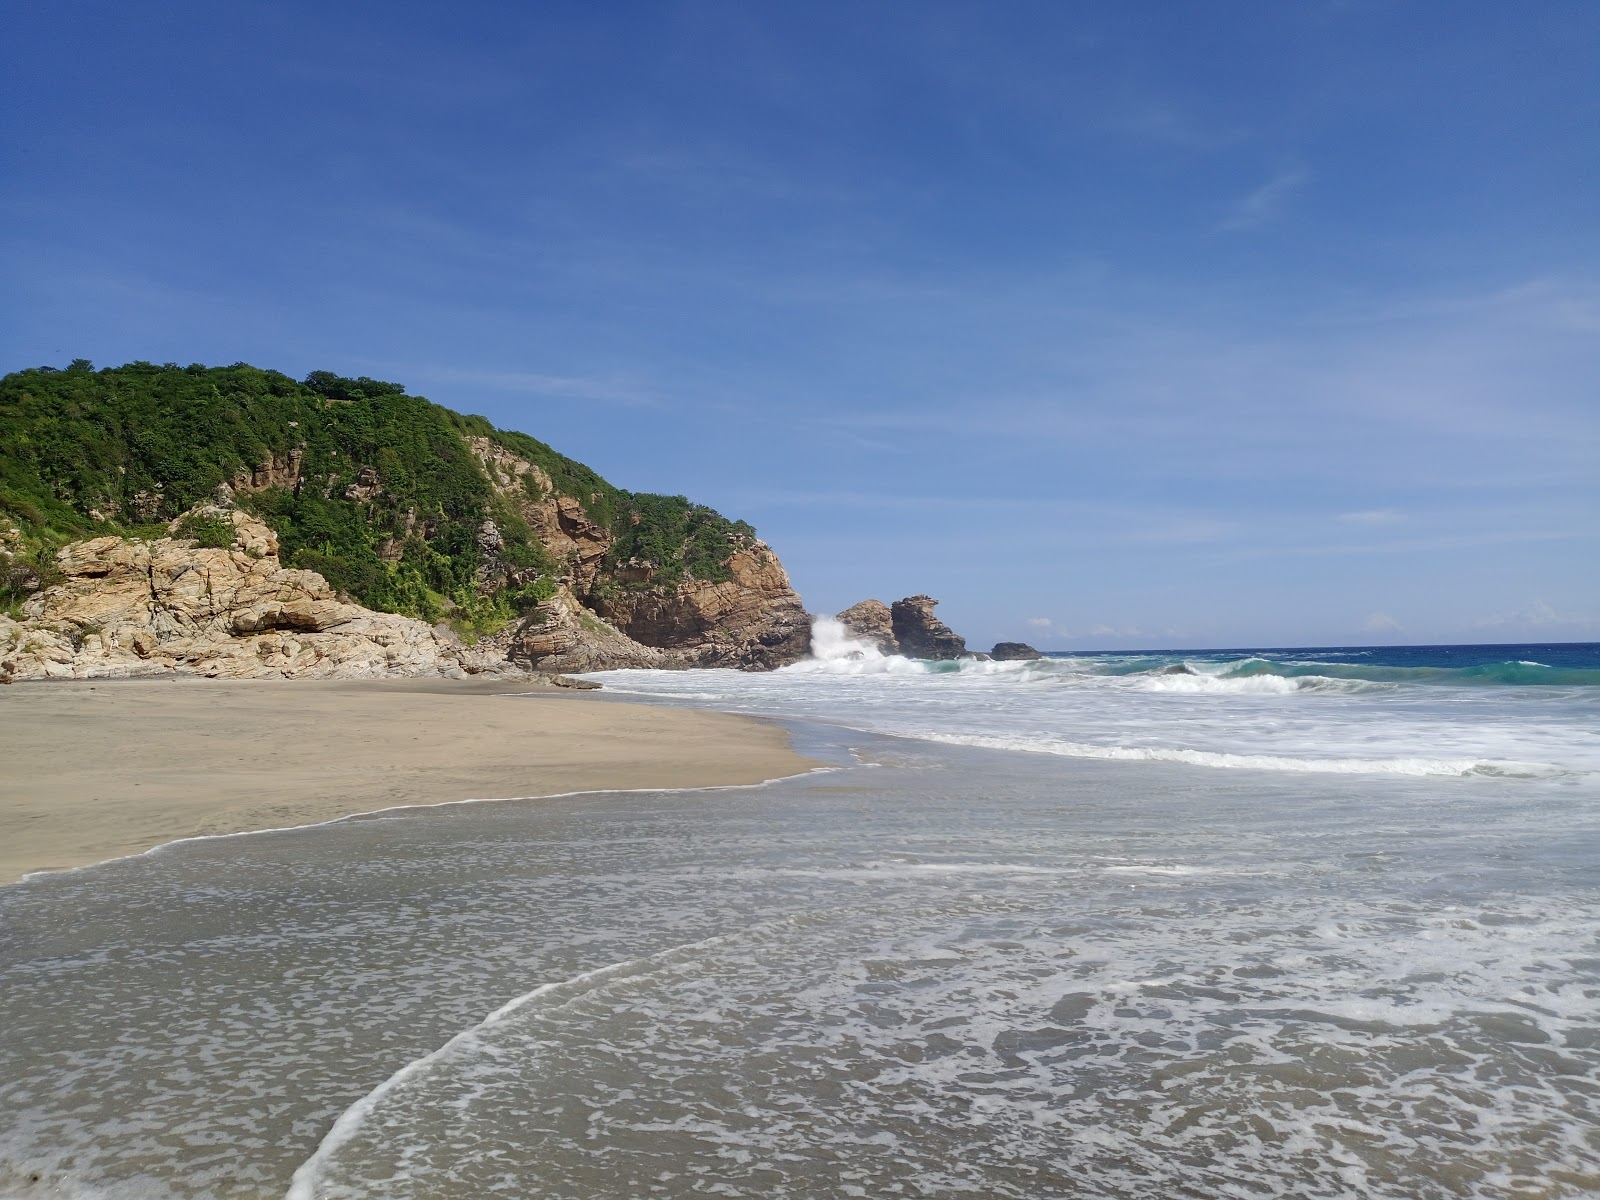 Foto di Playa La Ventanilla con una superficie del sabbia pura grigia